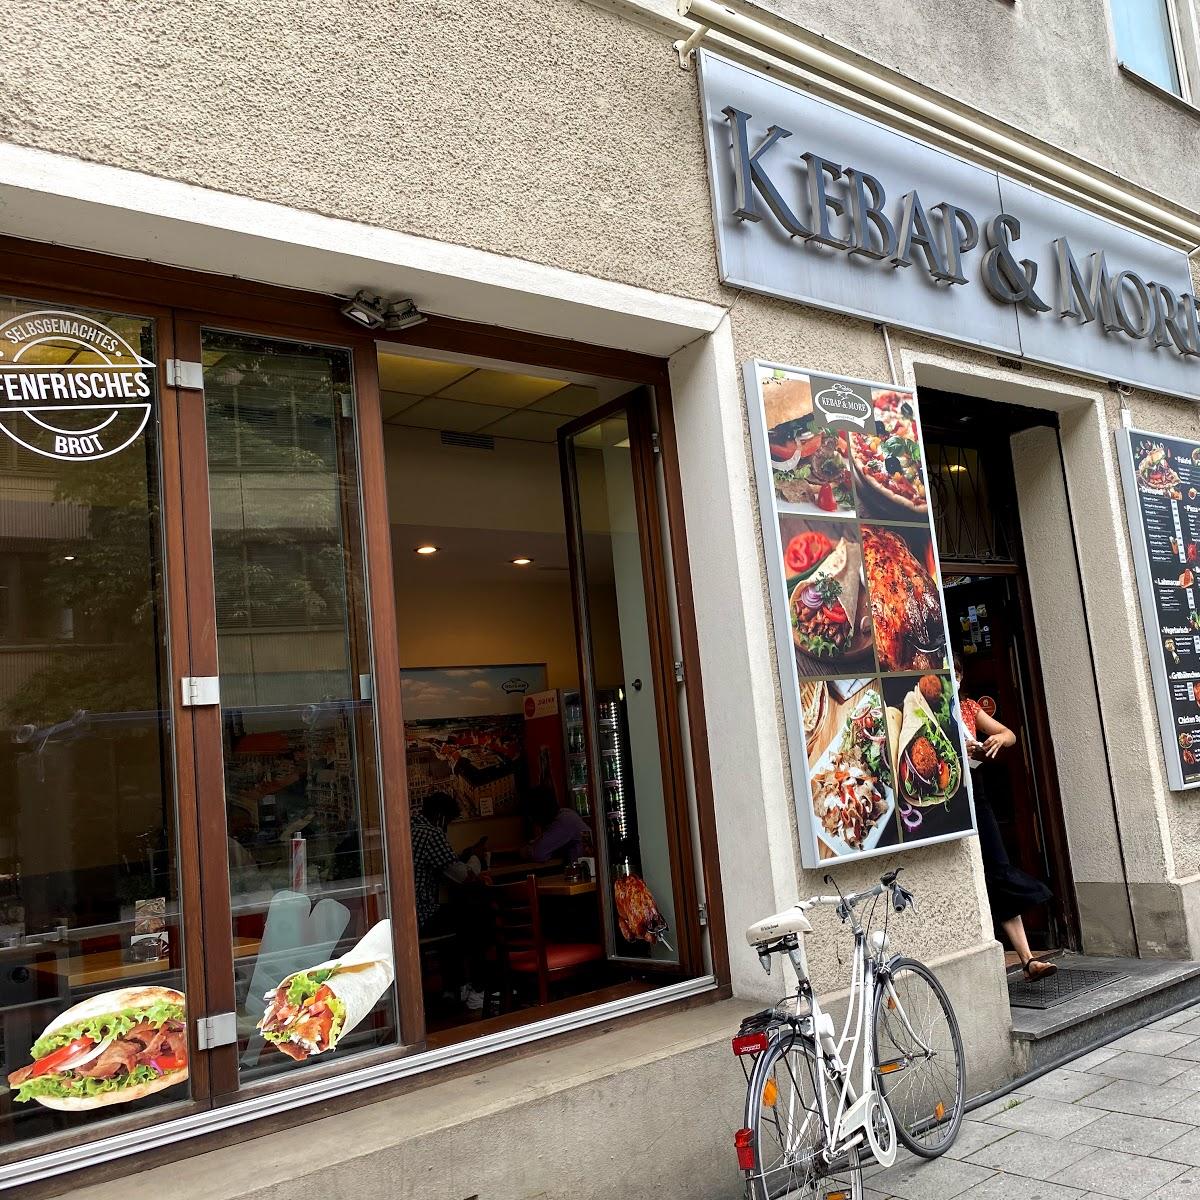 Restaurant "Kebap & More" in München